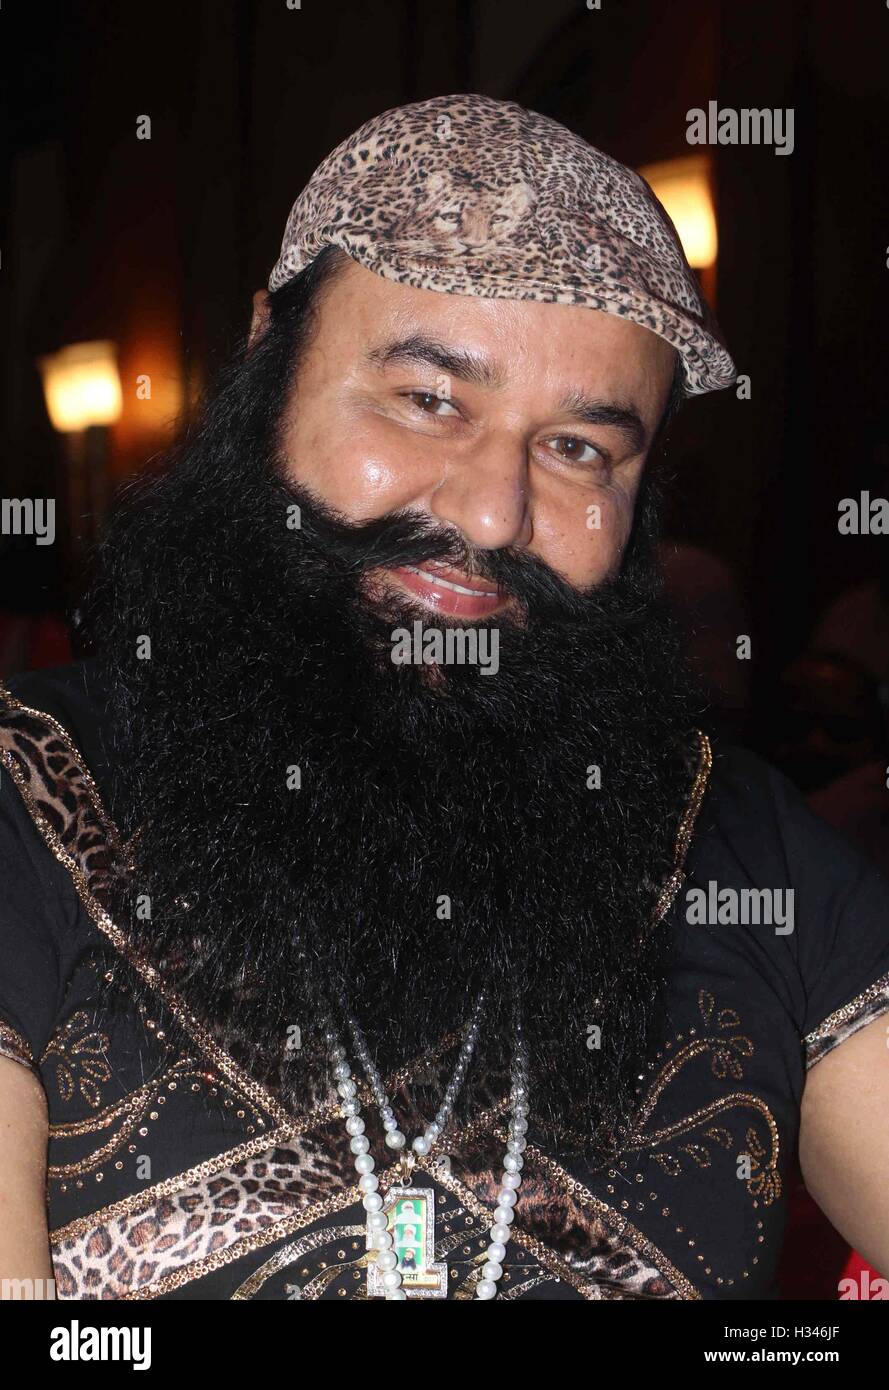 Dera Sacha Sauda (DSS) capo spirituale Gurmeet Ram Rahim Singh durante il  lancio di musica film MSG il guerriero cuore di leone Mumbai India Foto  stock - Alamy